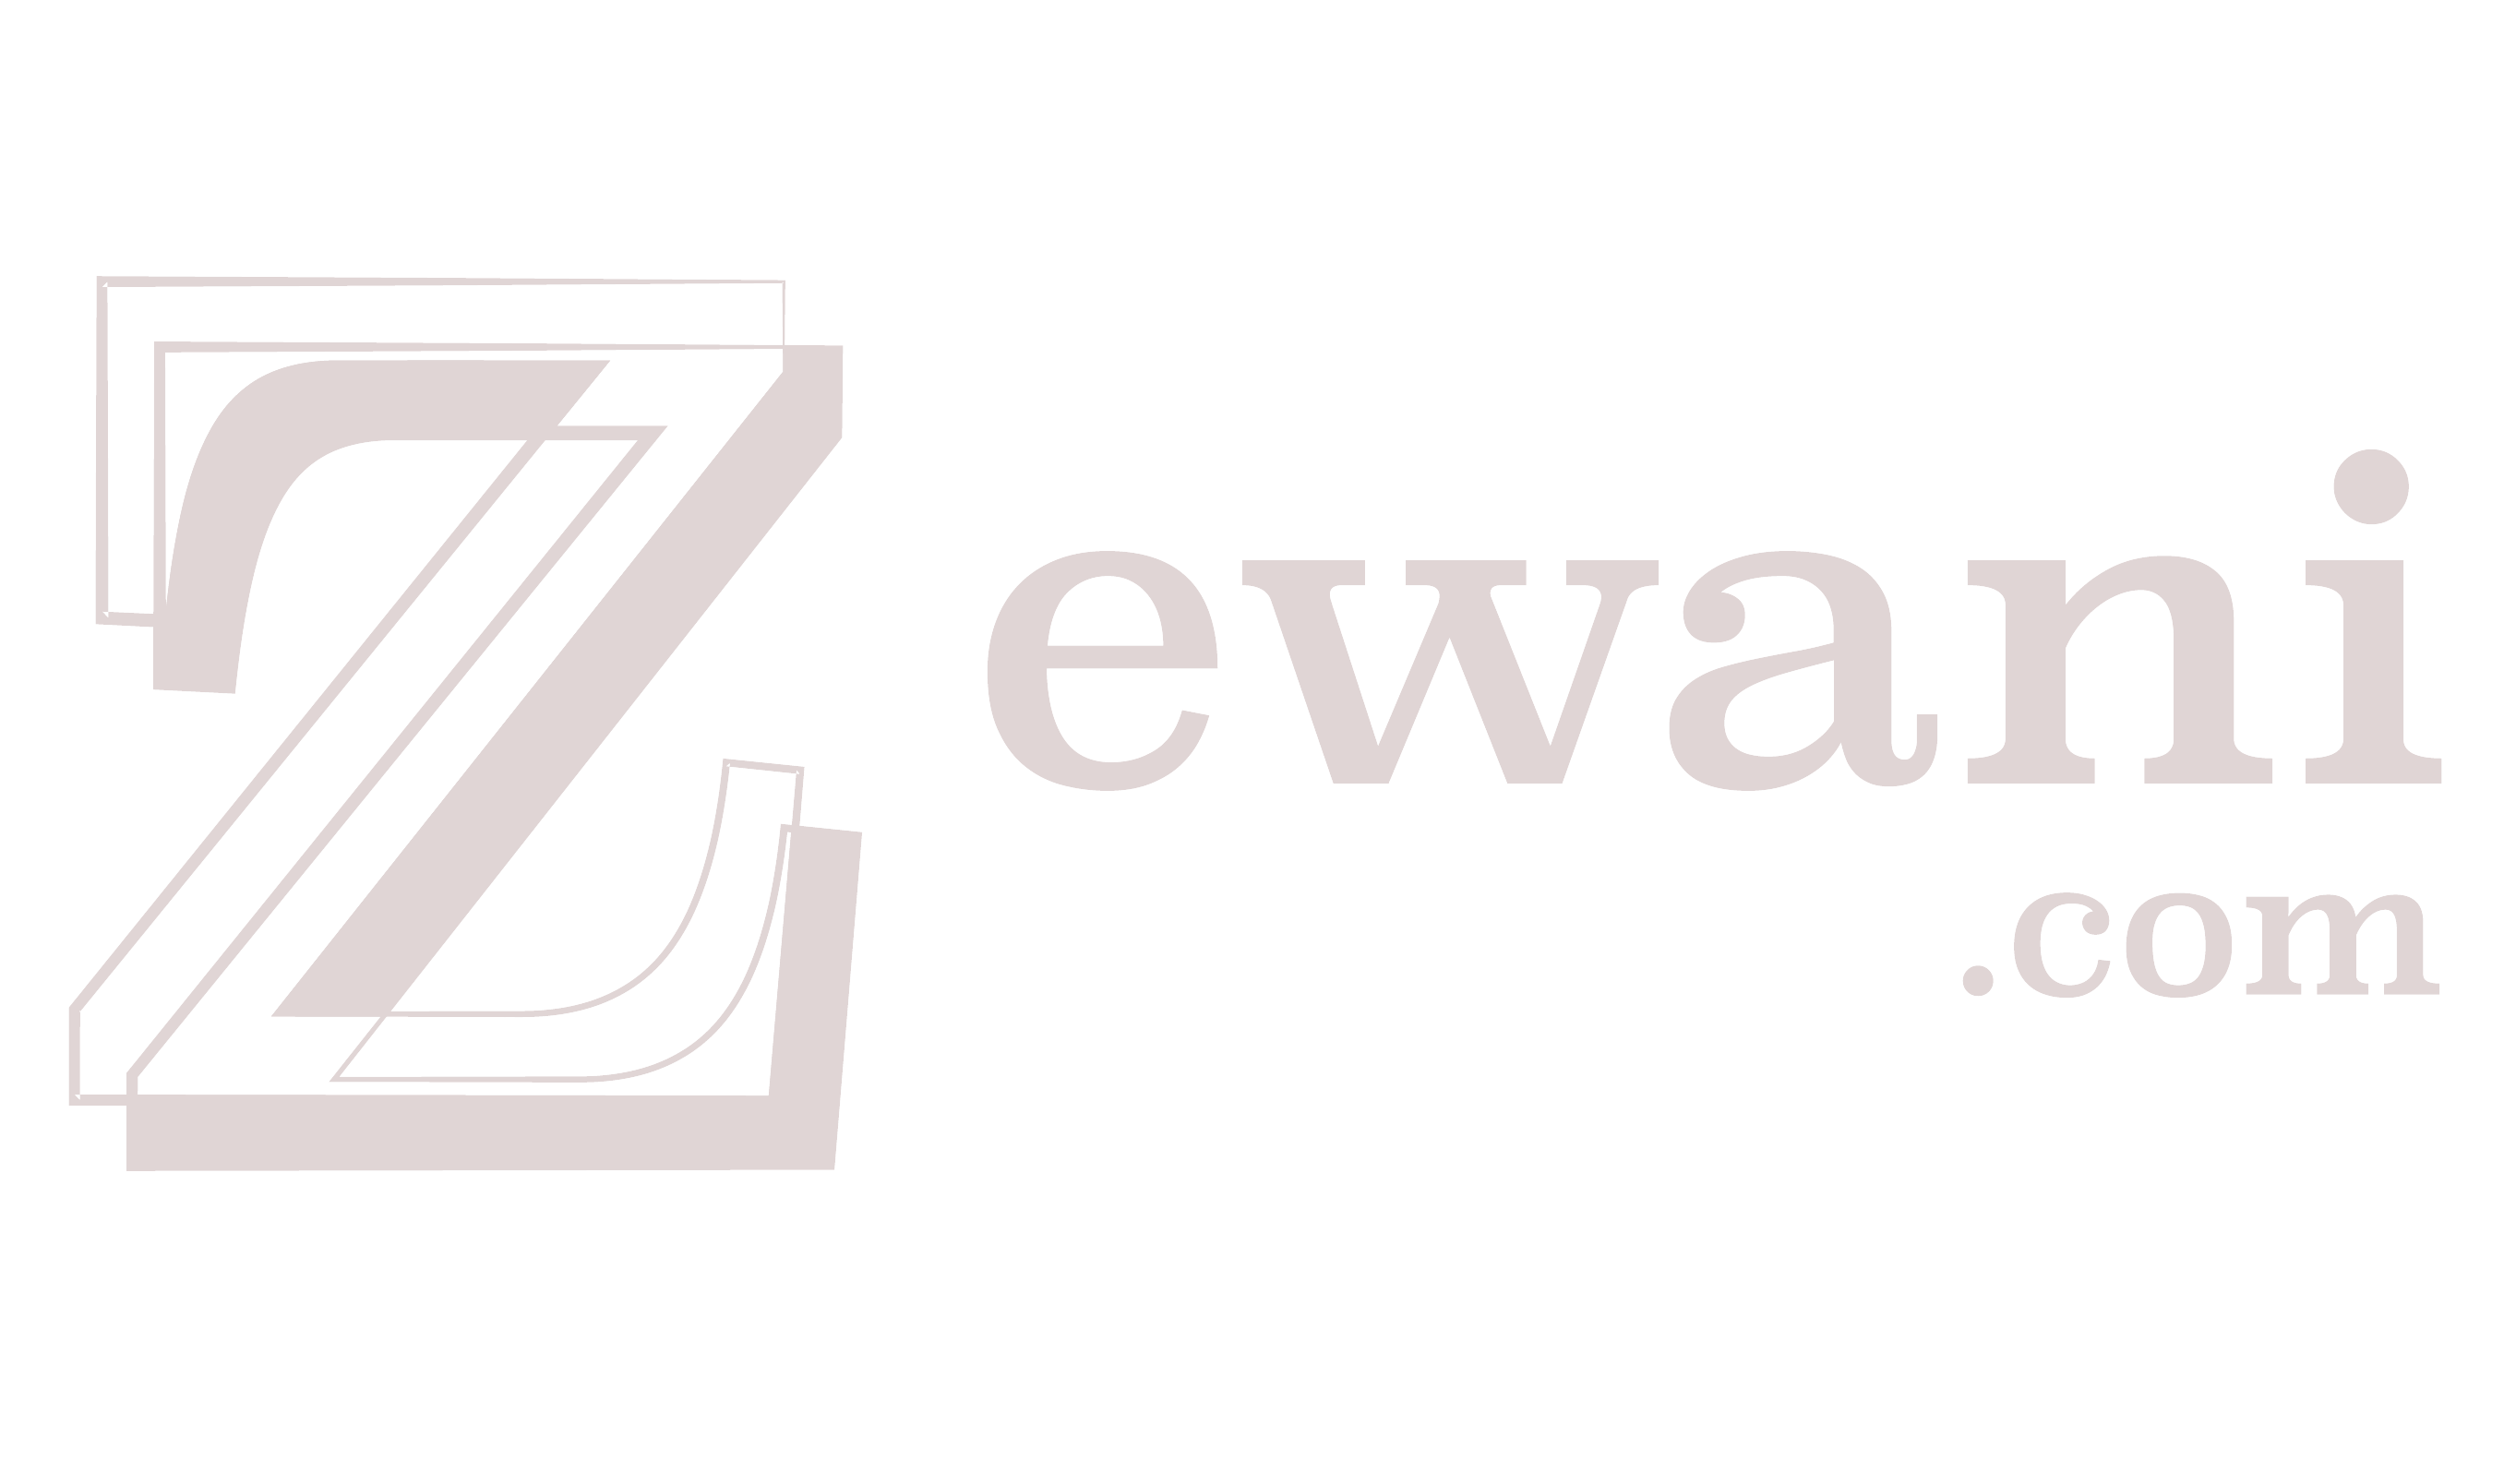 zewani.com main logo